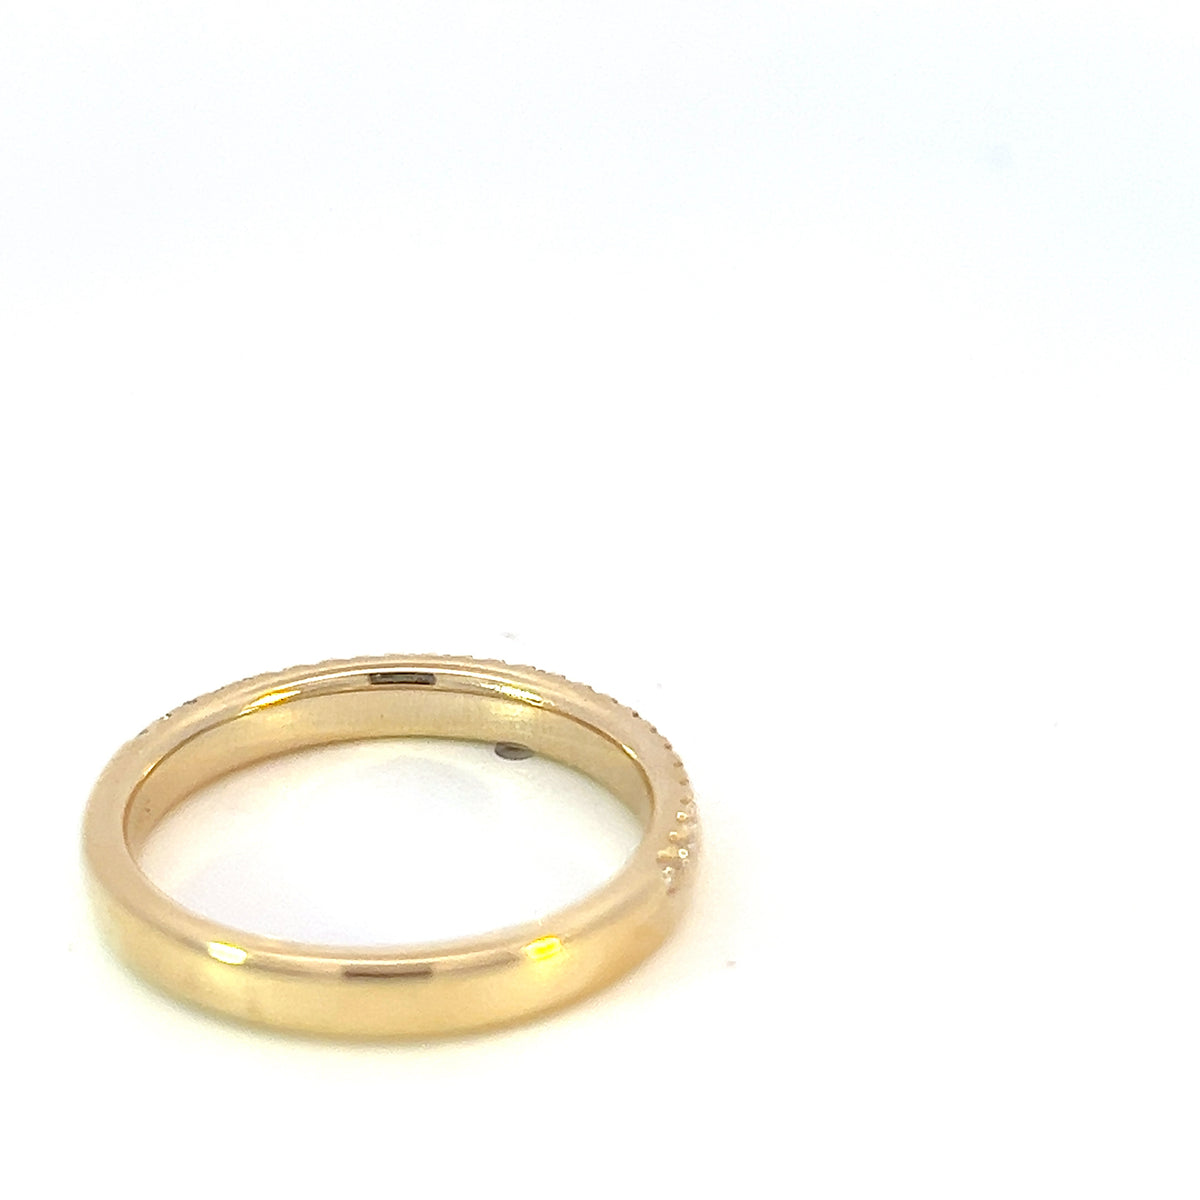 14K Yellow Gold 0.16cttw Diamond Ring - size 6.5